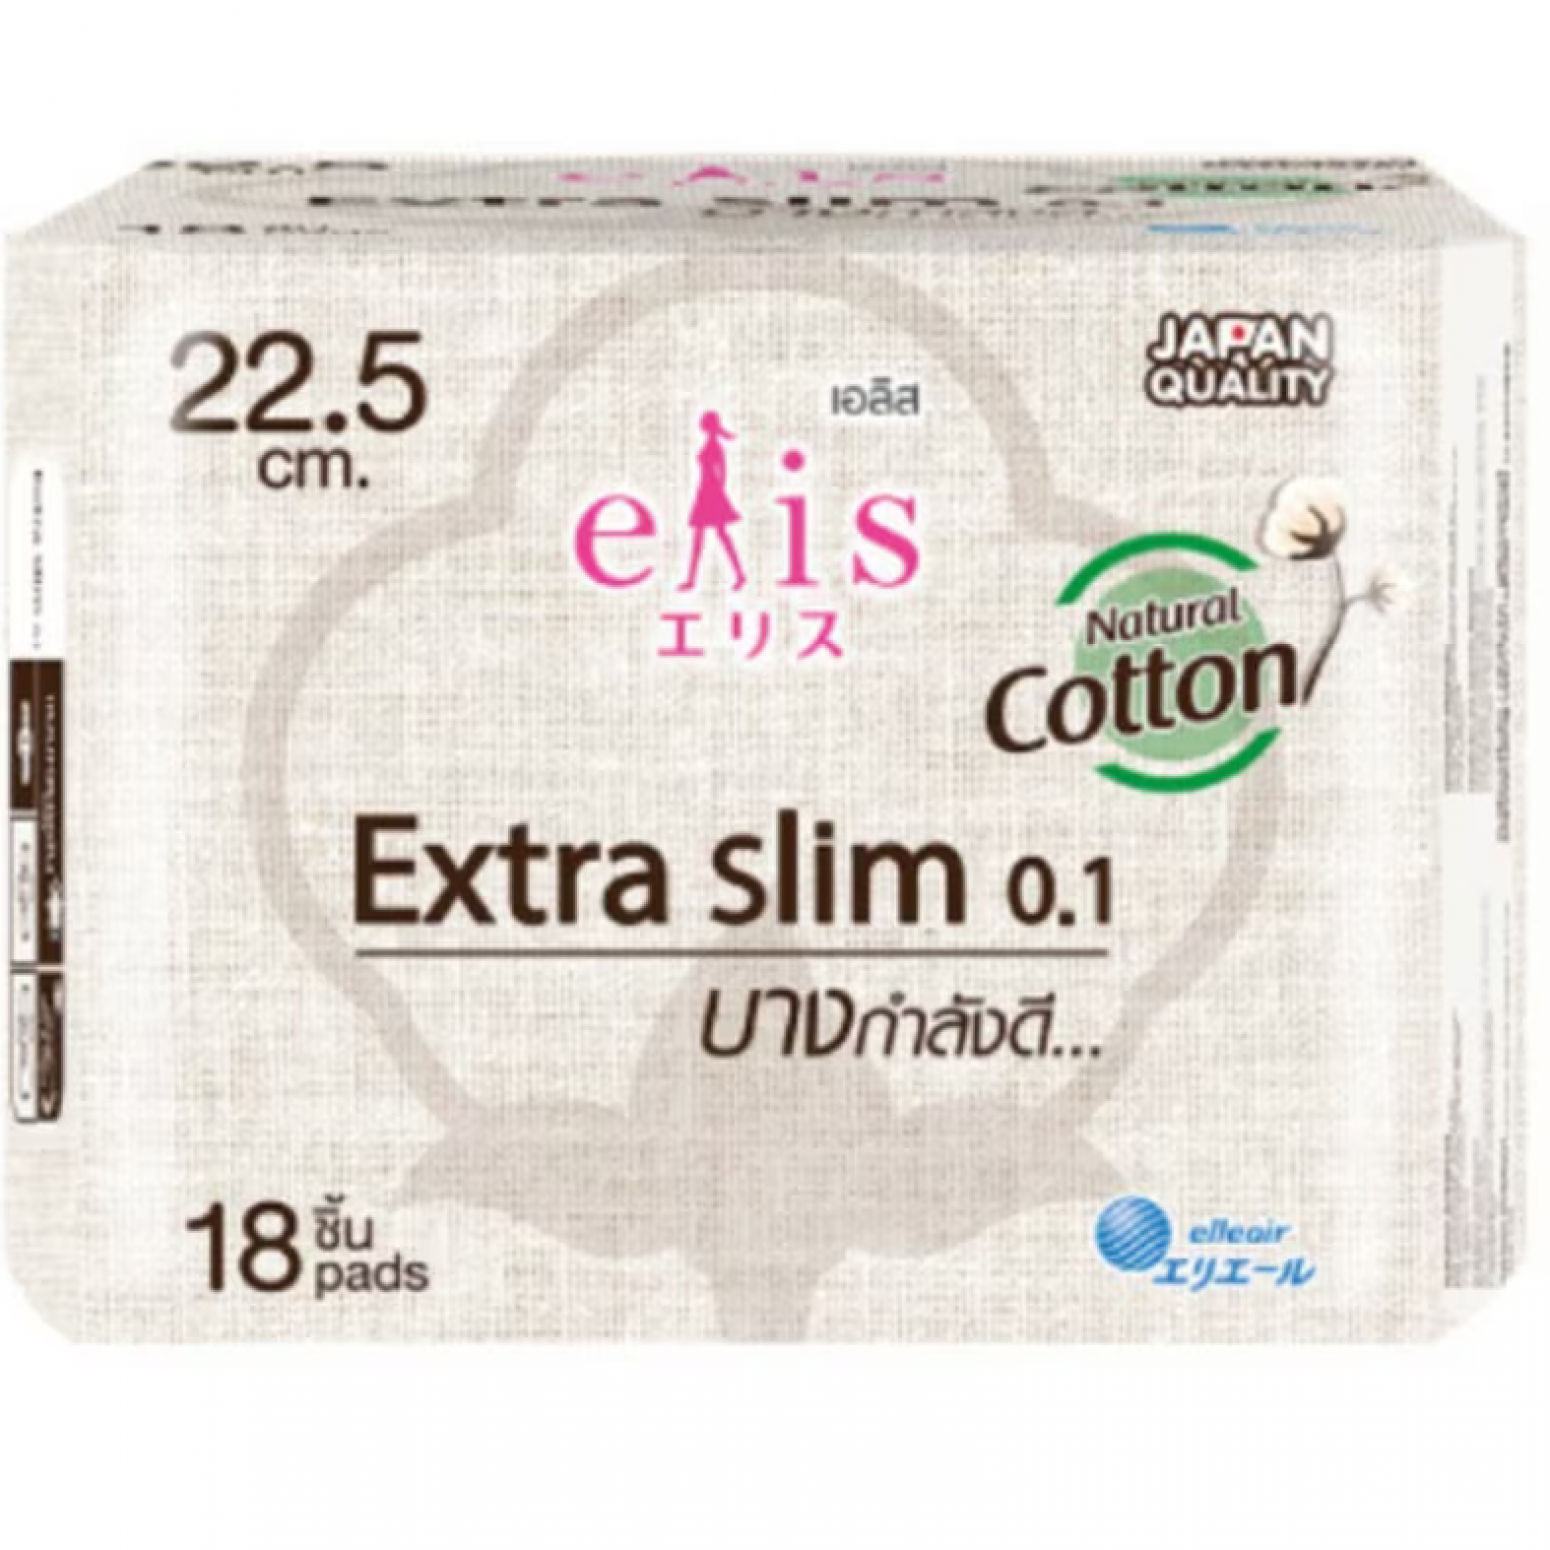 Elis Extra Slim 0.1 Sanitary Napkin Day Ultra Slim Wings 22.5cm